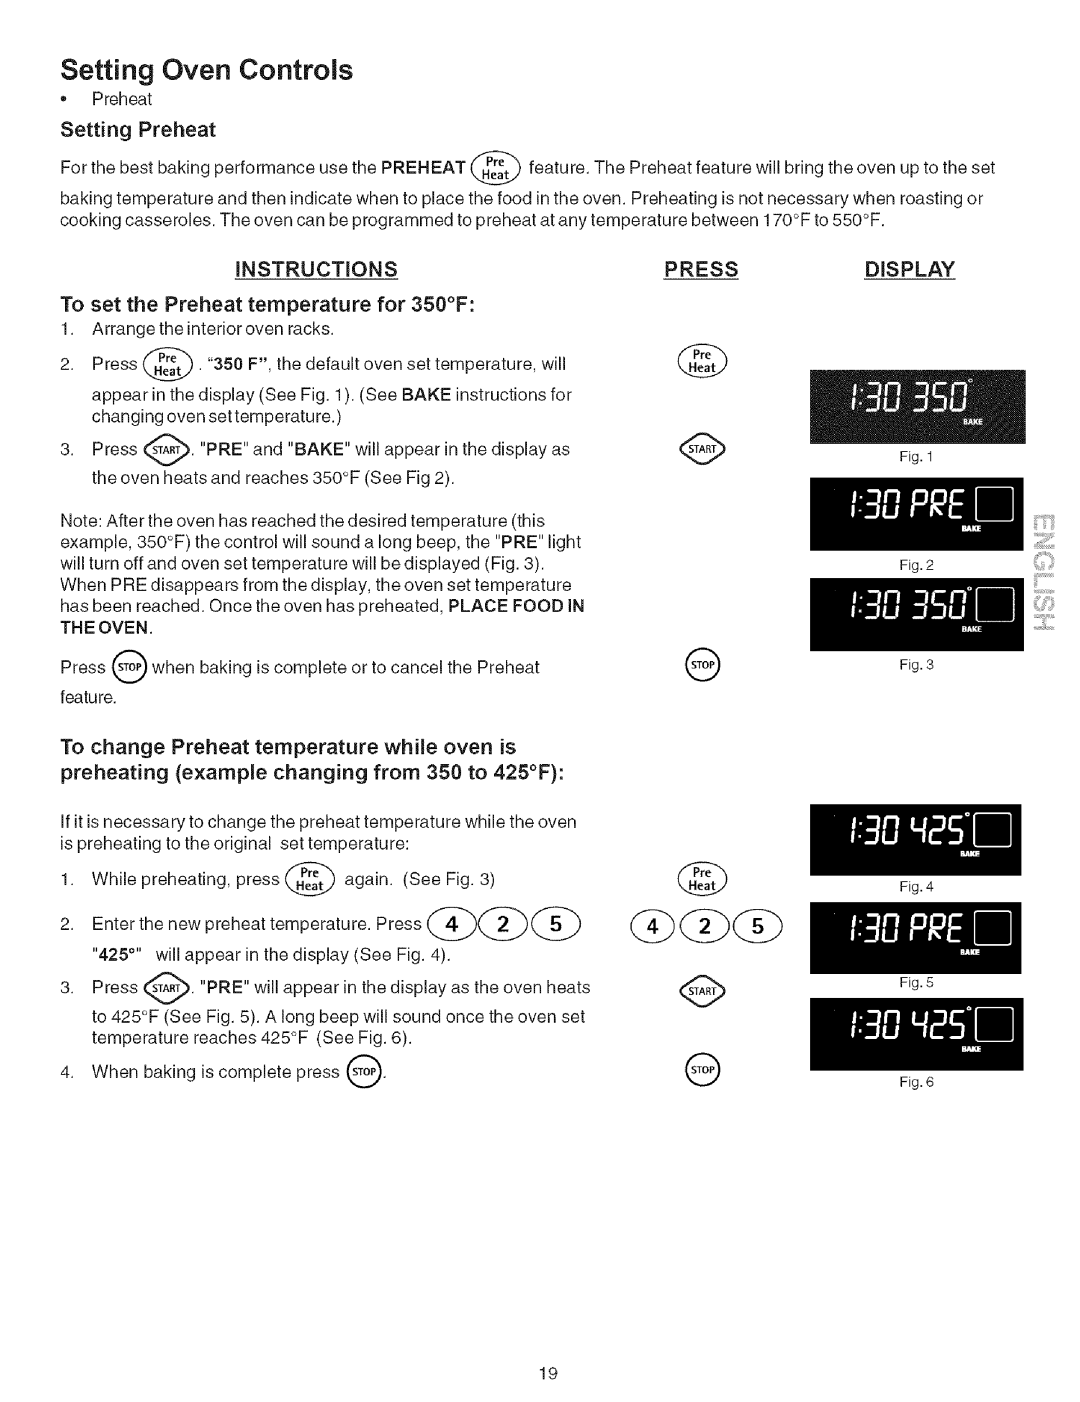 Kenmore 790.7946 manual Setting Oven Controls, Setting Preheat, Instructions, Press, Display 